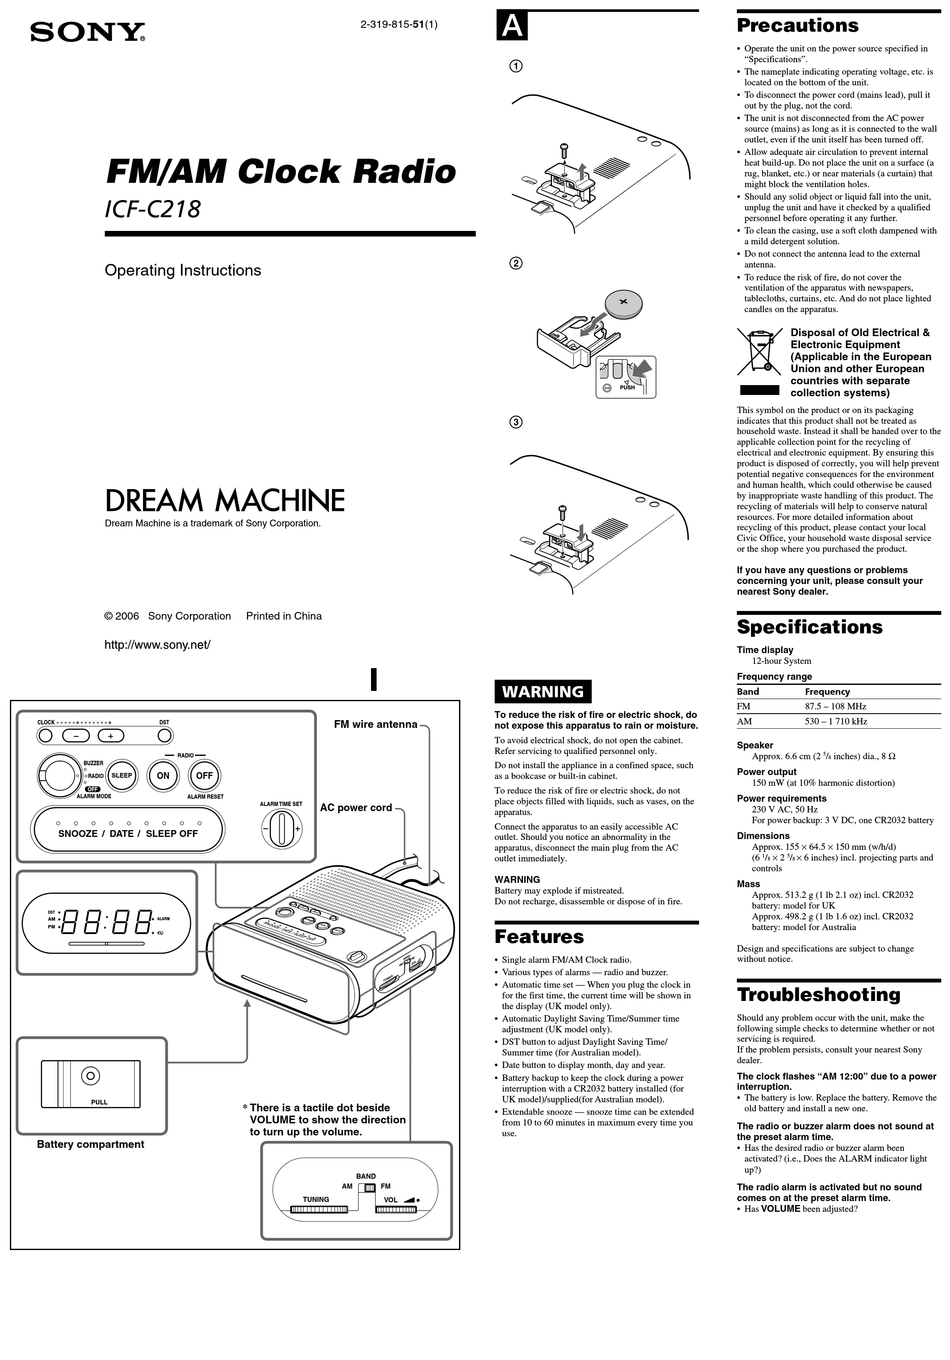 Model ICF-C218 27242704626 Sony Dream Machine FM/AM Alarm Clock Radio 